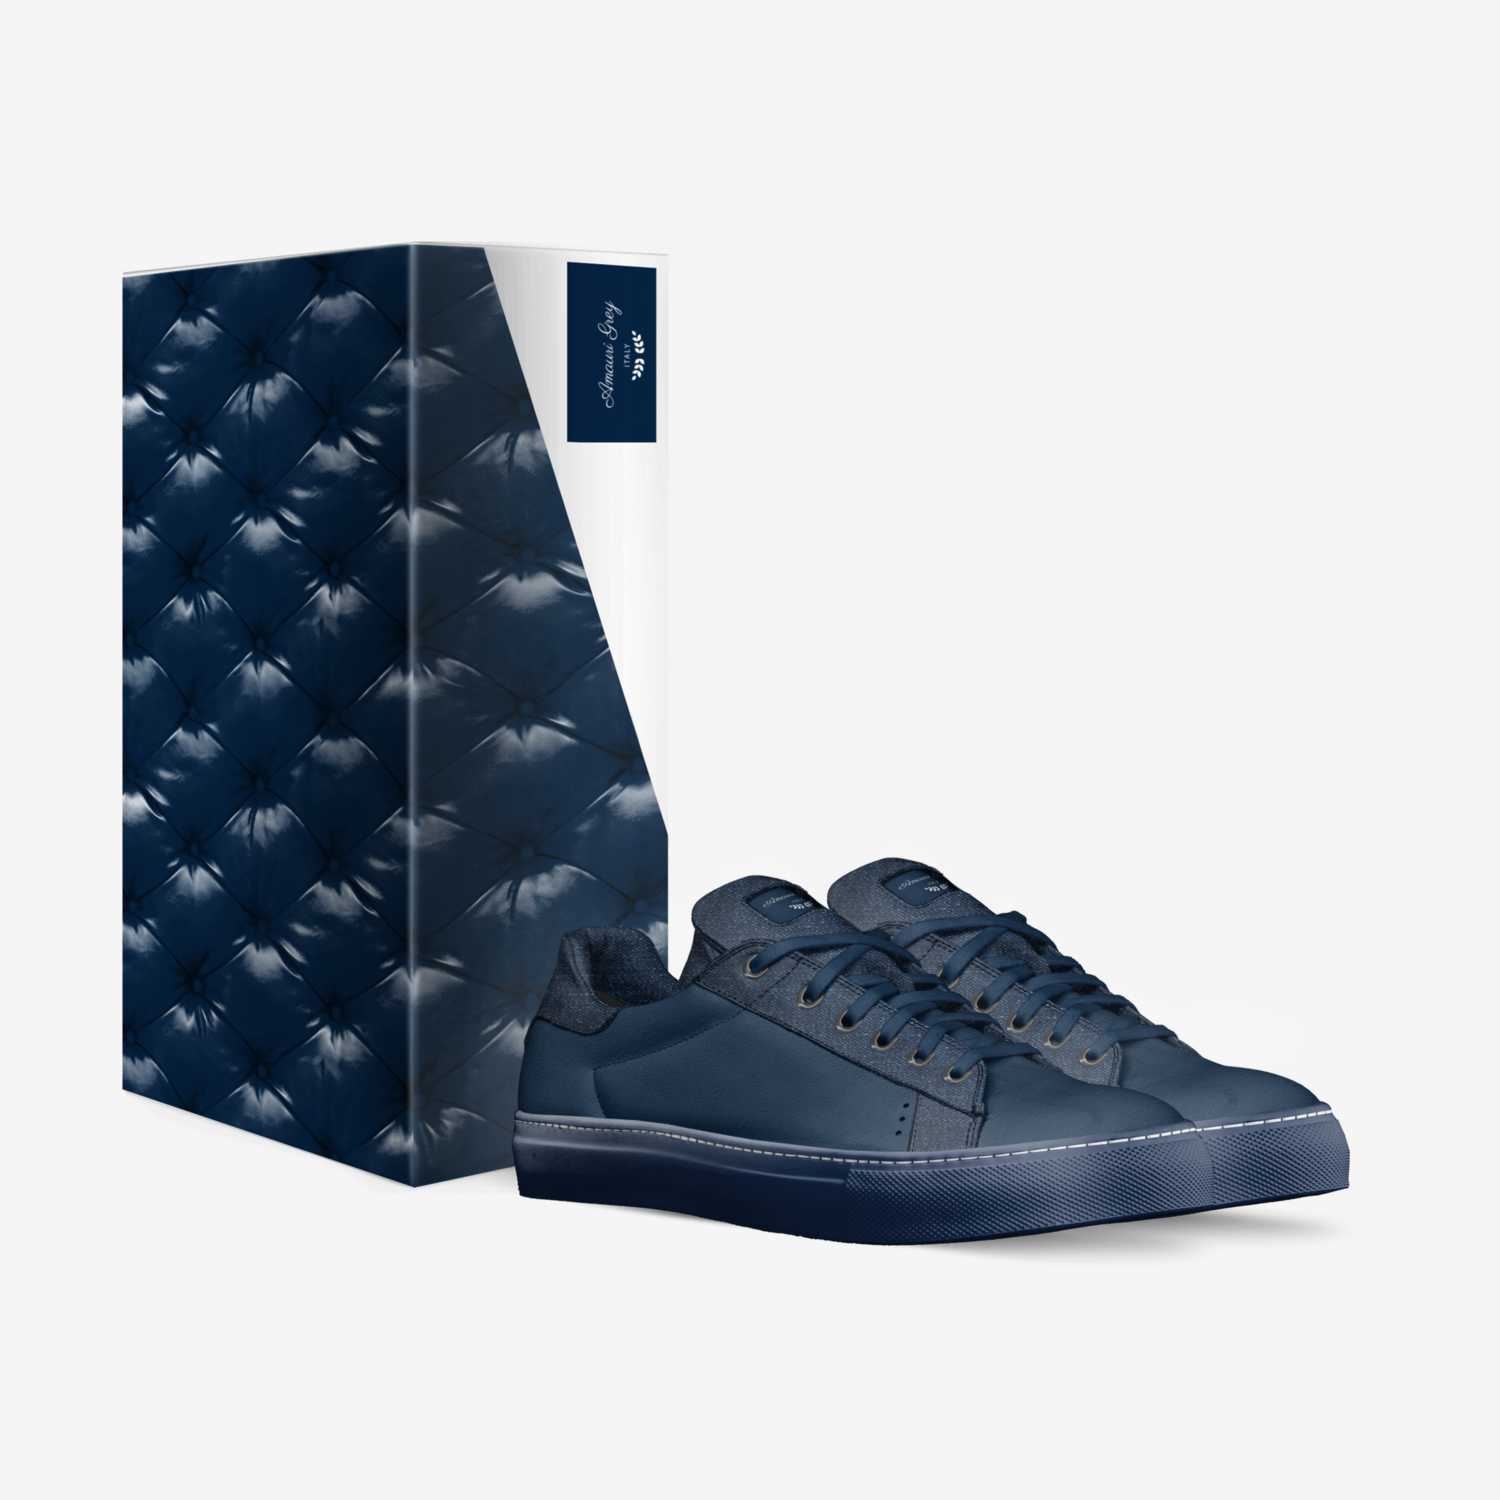 Amauri Grey custom made in Italy shoes by Naim Travis | Box view